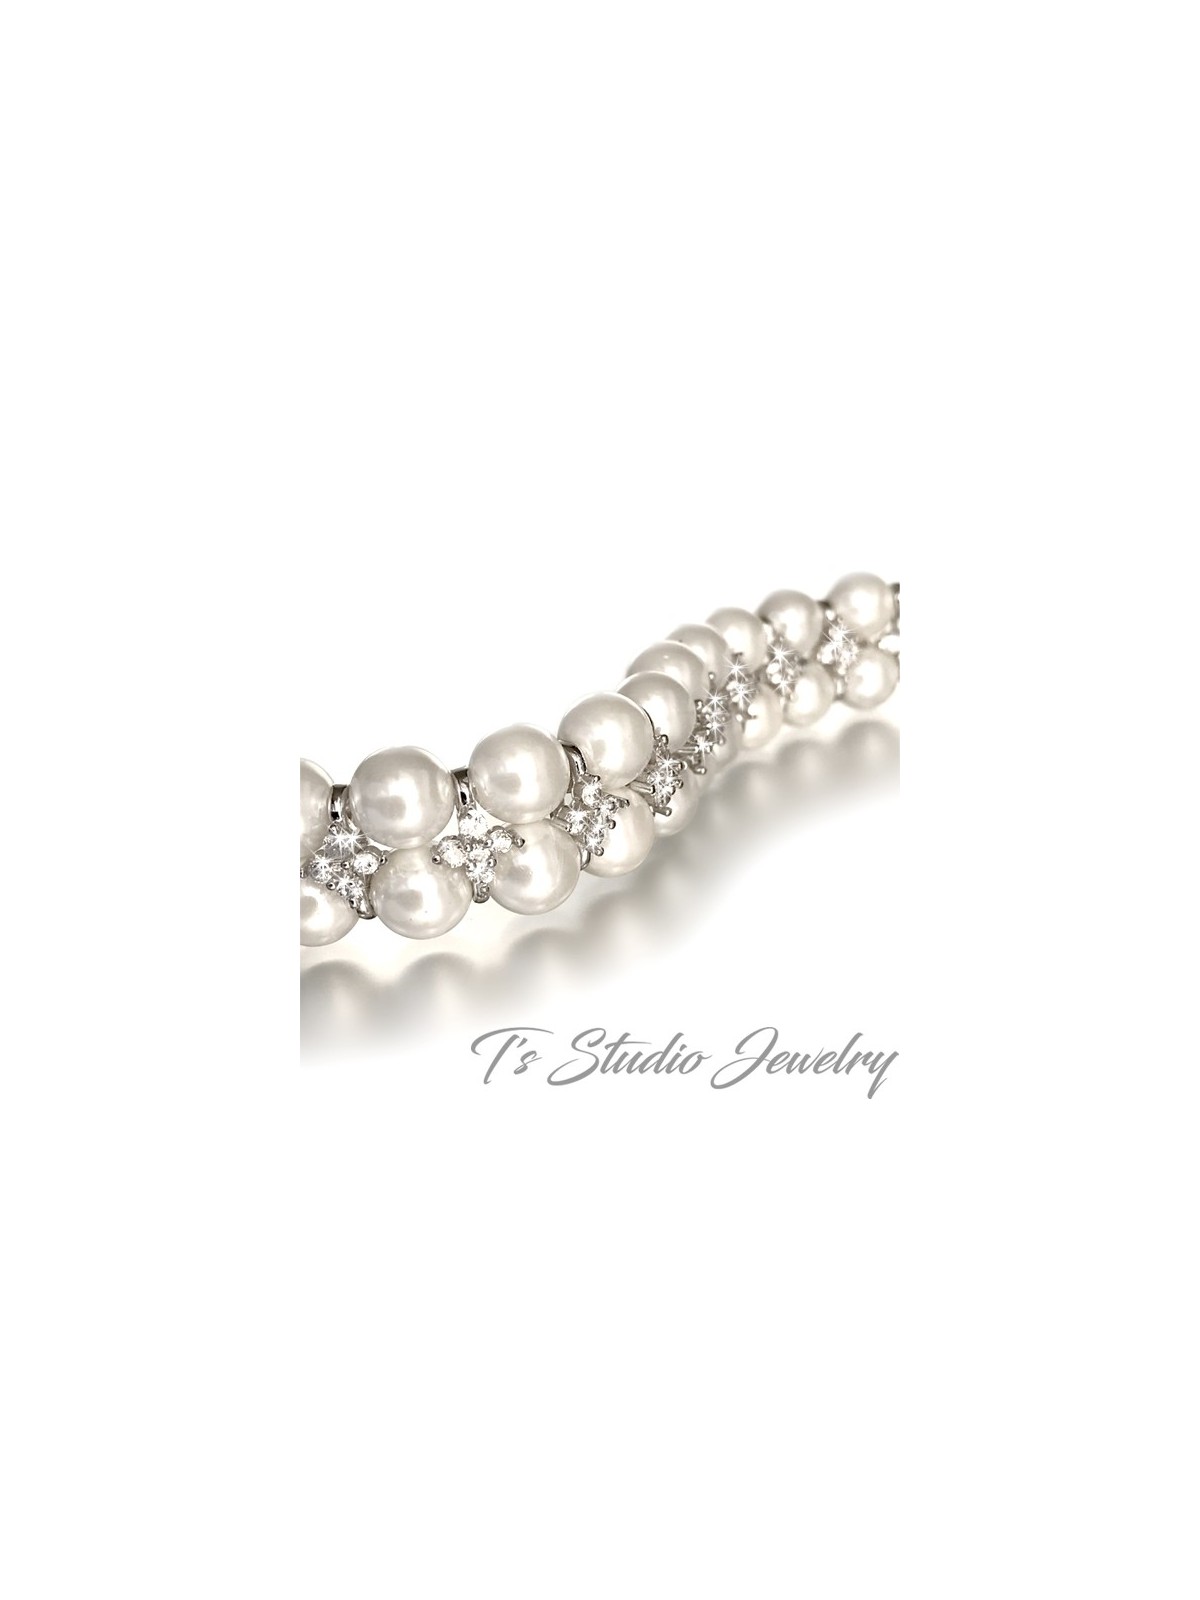 Cubic Zirconia & Pearl Bridal Bracelet